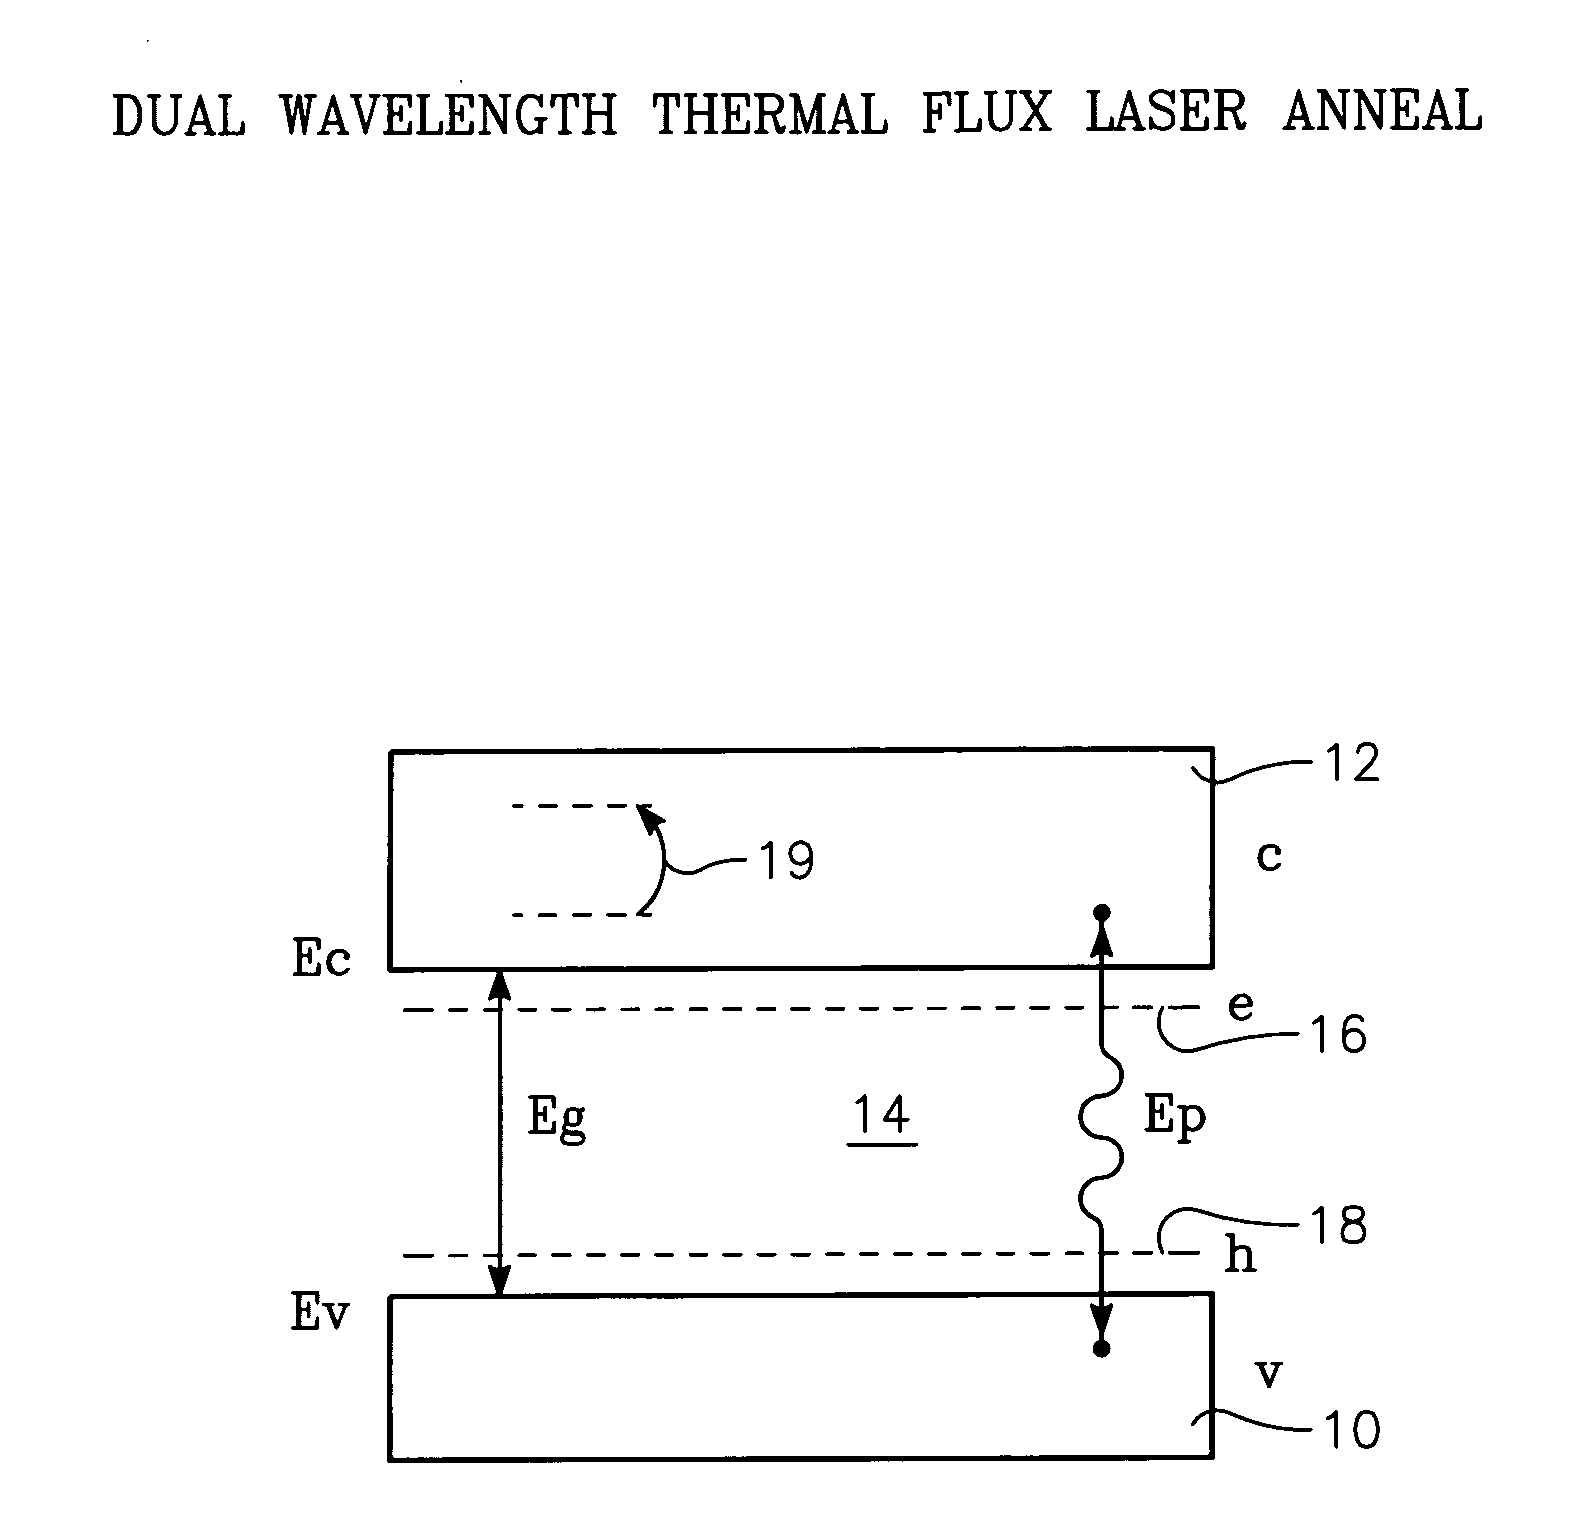 Dual wavelength thermal flux laser anneal